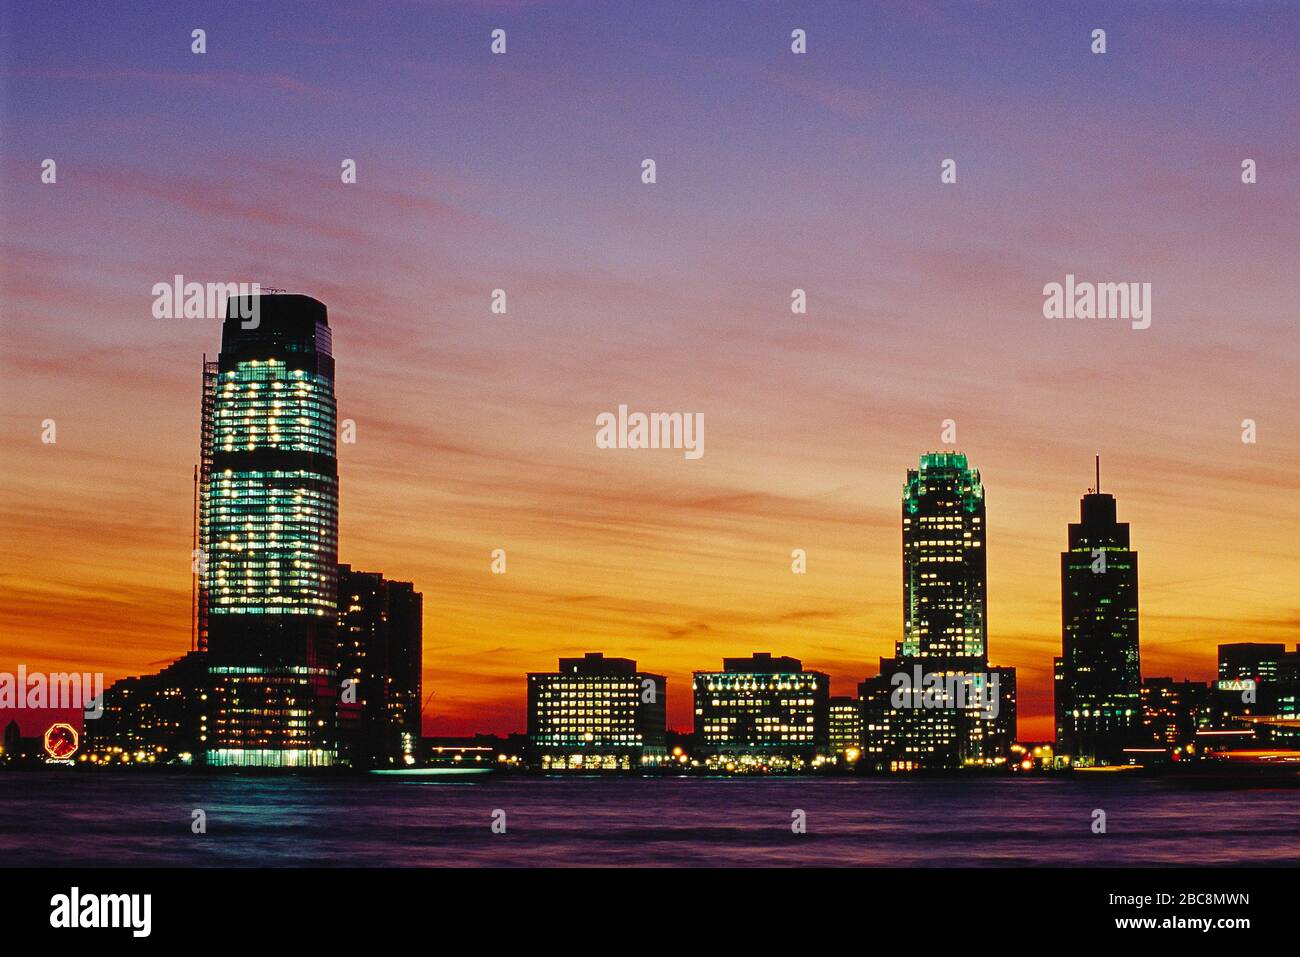 USA. New Jersey. Jersey City skyline with Goldman Sachs Tower at sunset. Stock Photo